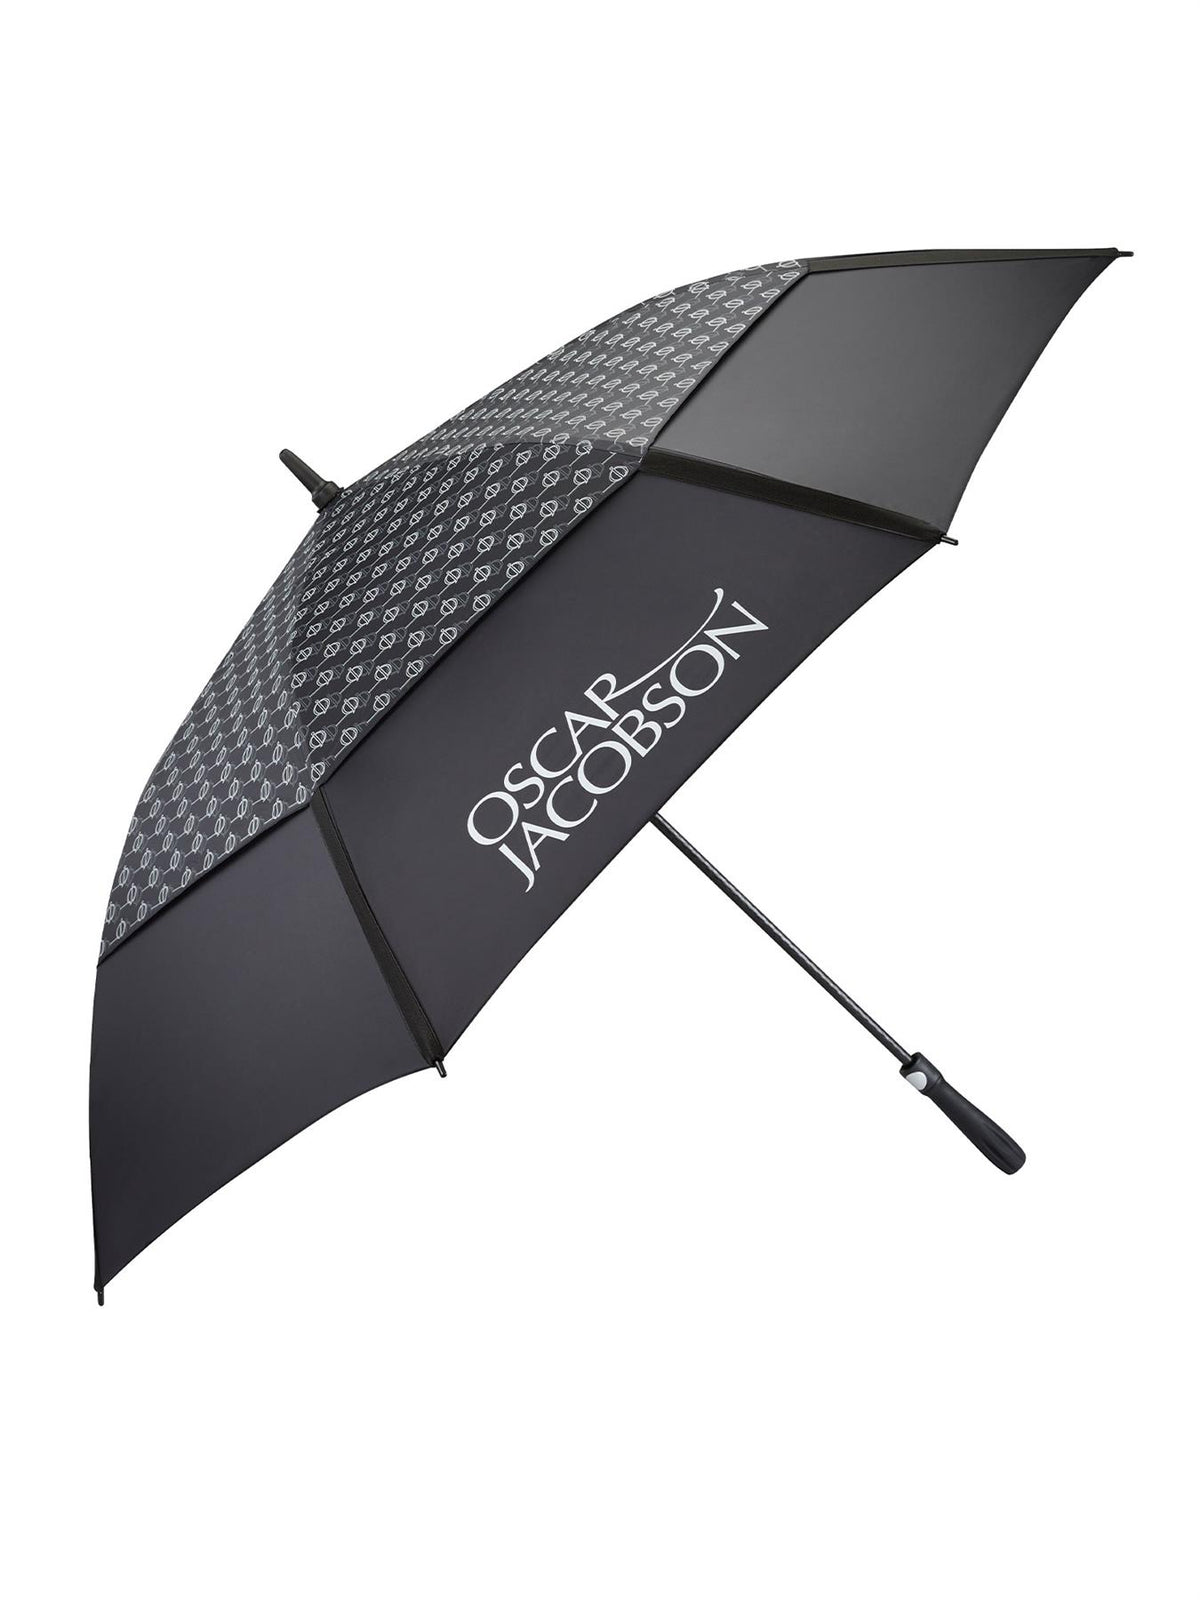 Gio Print Dual Canopy 64" Umbrella